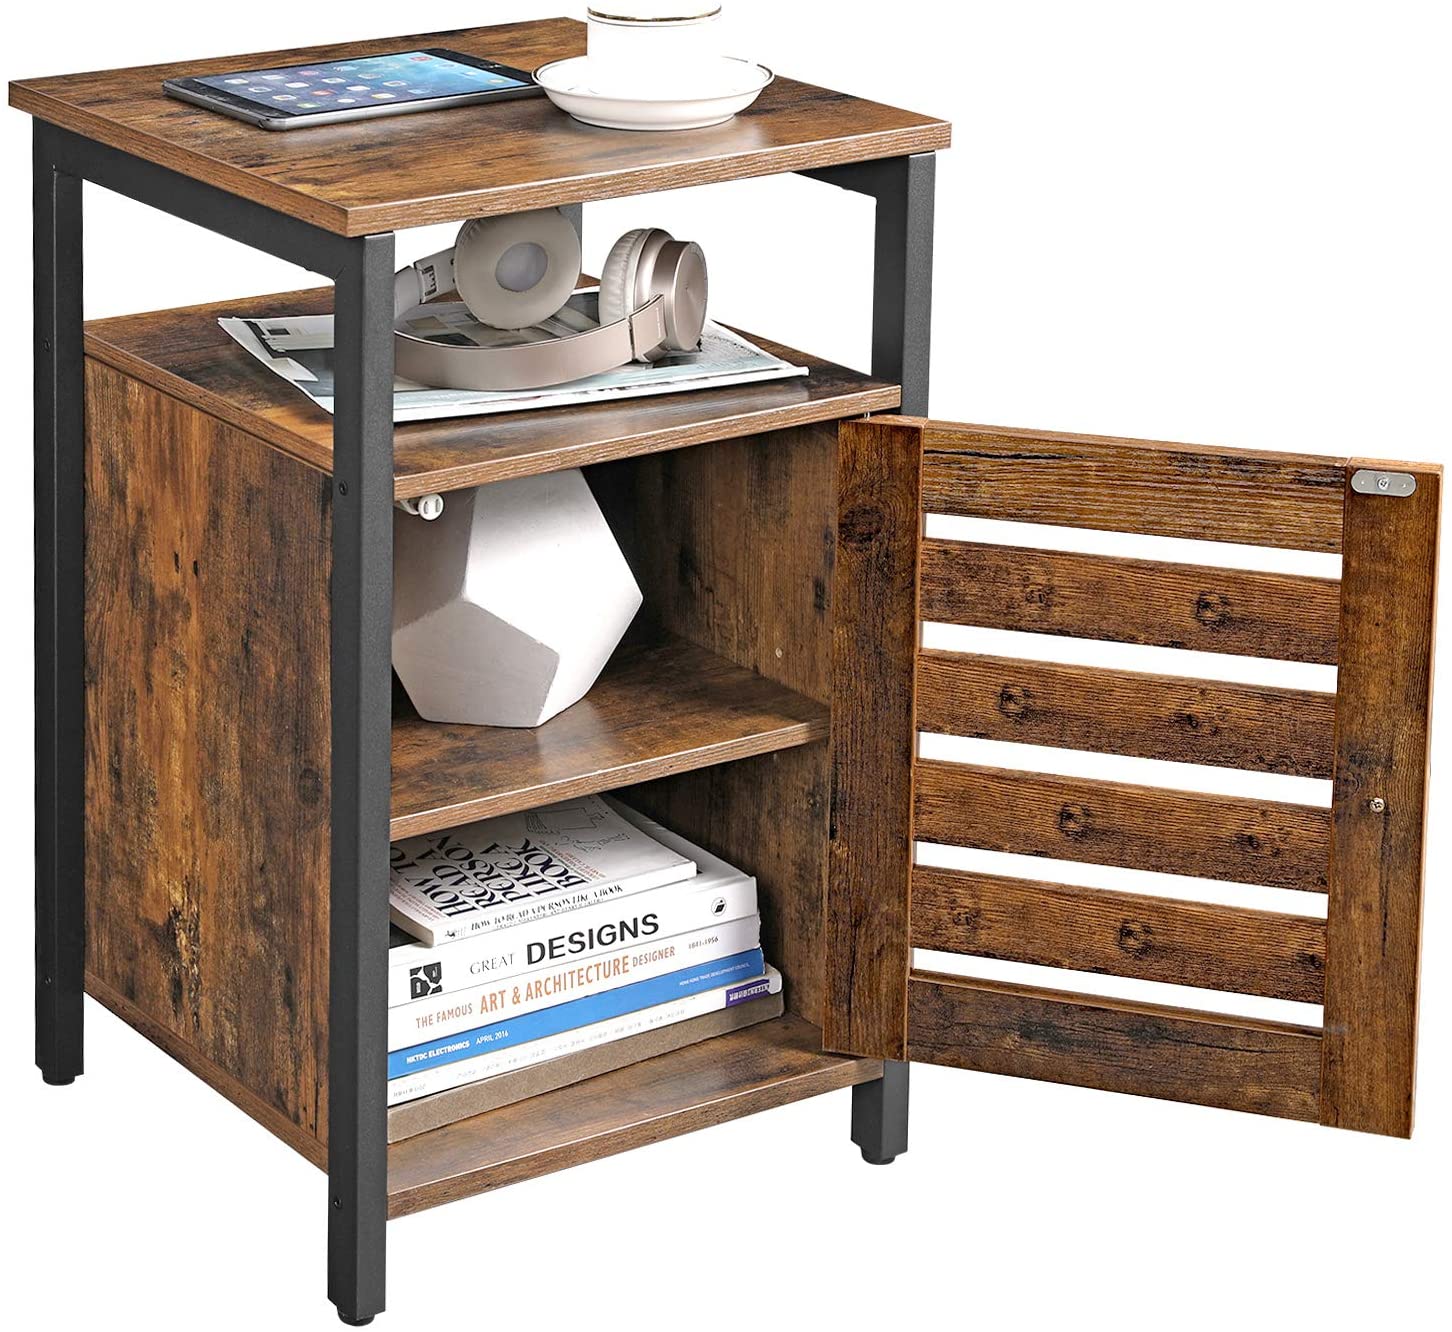 Bedside Table With 2 Adjustable Shelves Steel Frame Rustic Brown And Black